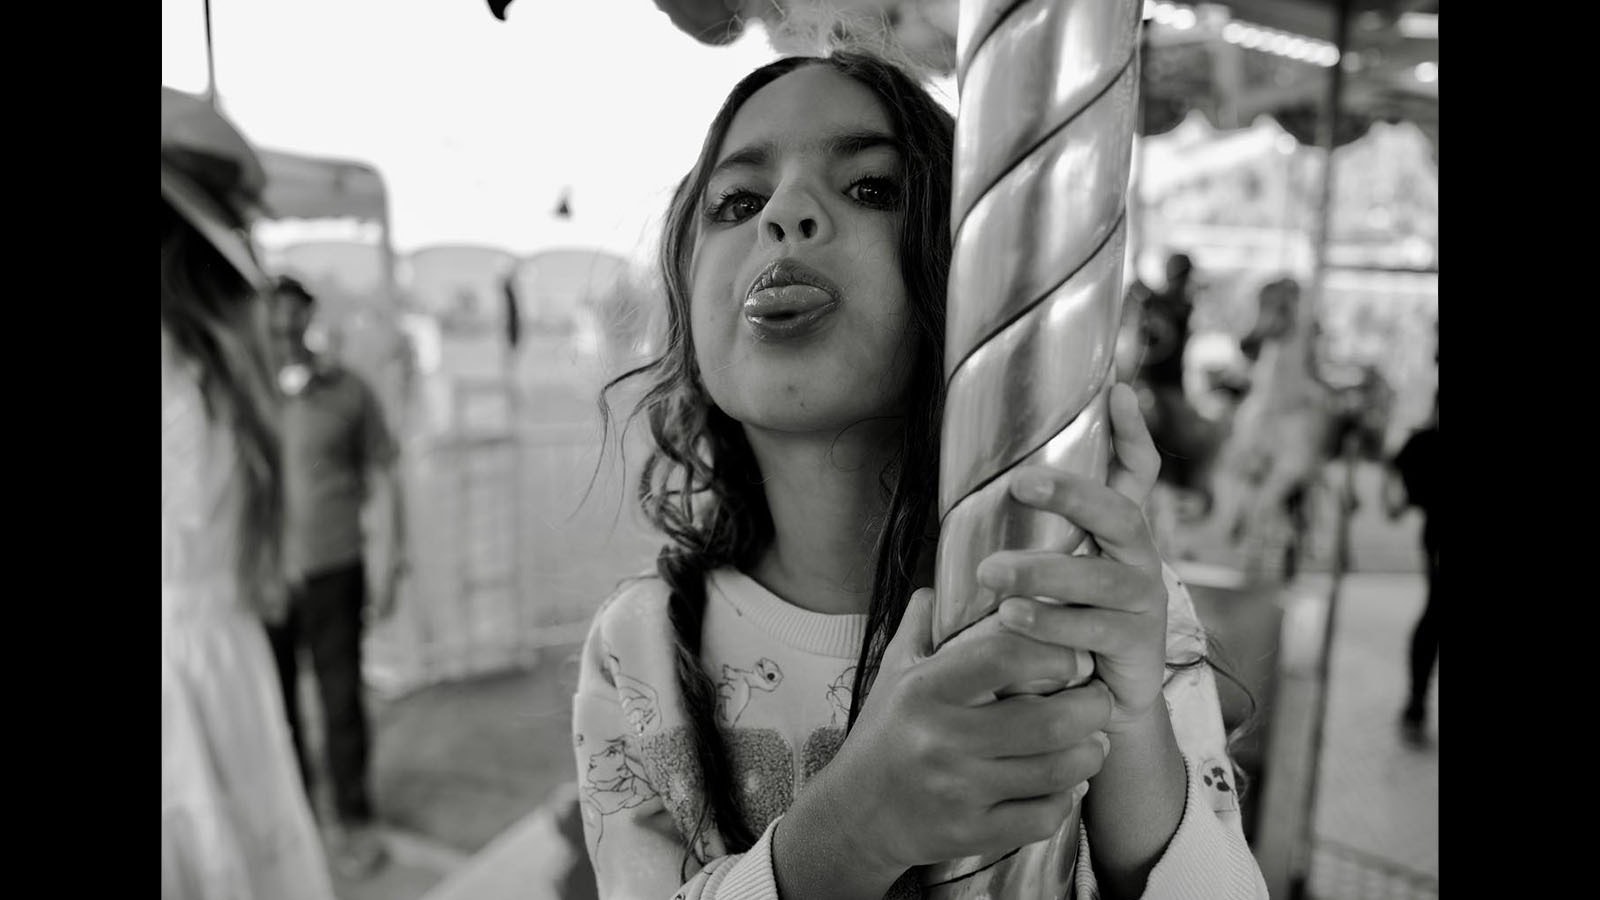 Nikki Sixx's daughter Ruby, 4, enjoys the carousel at the Teton Count Fair.